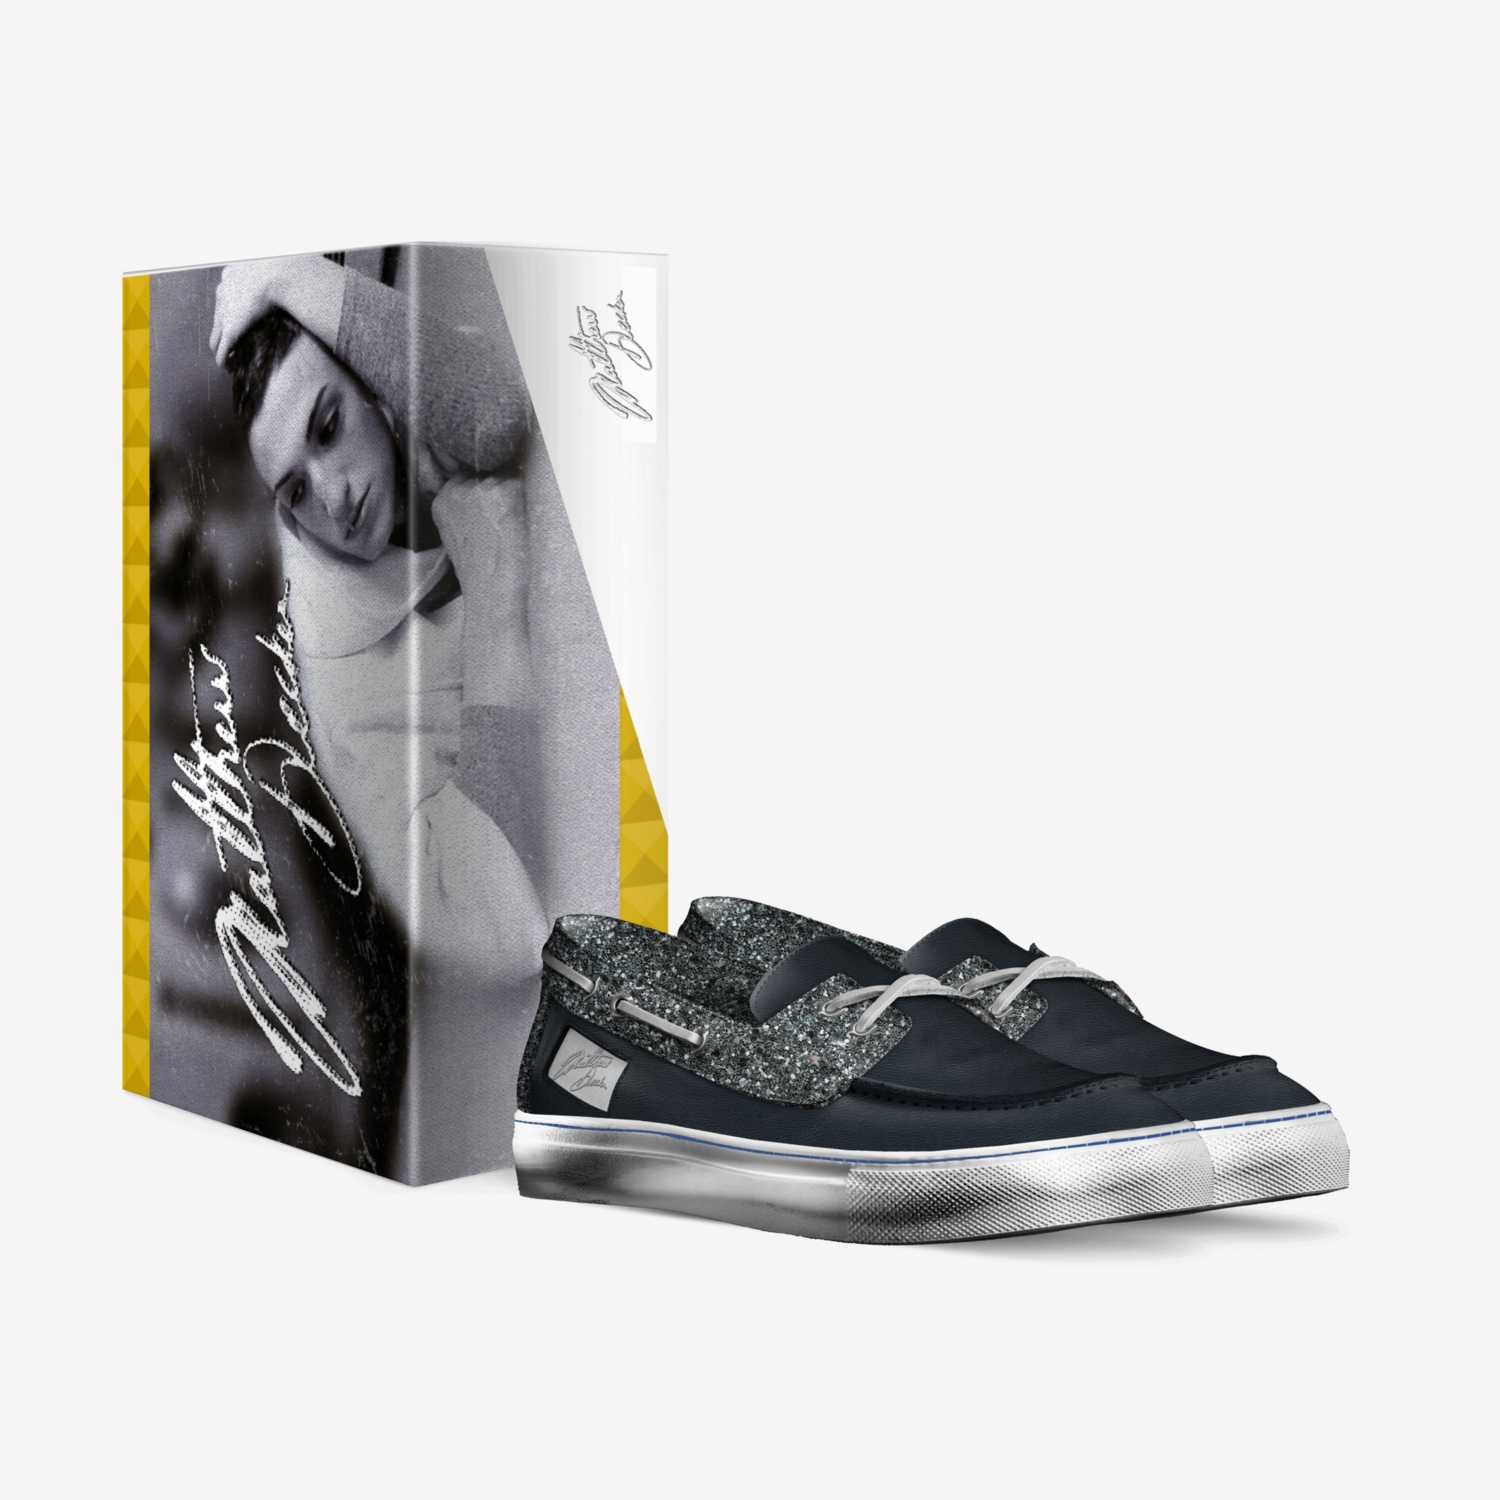 Matthew Decker  custom made in Italy shoes by Matthew Decker | Box view